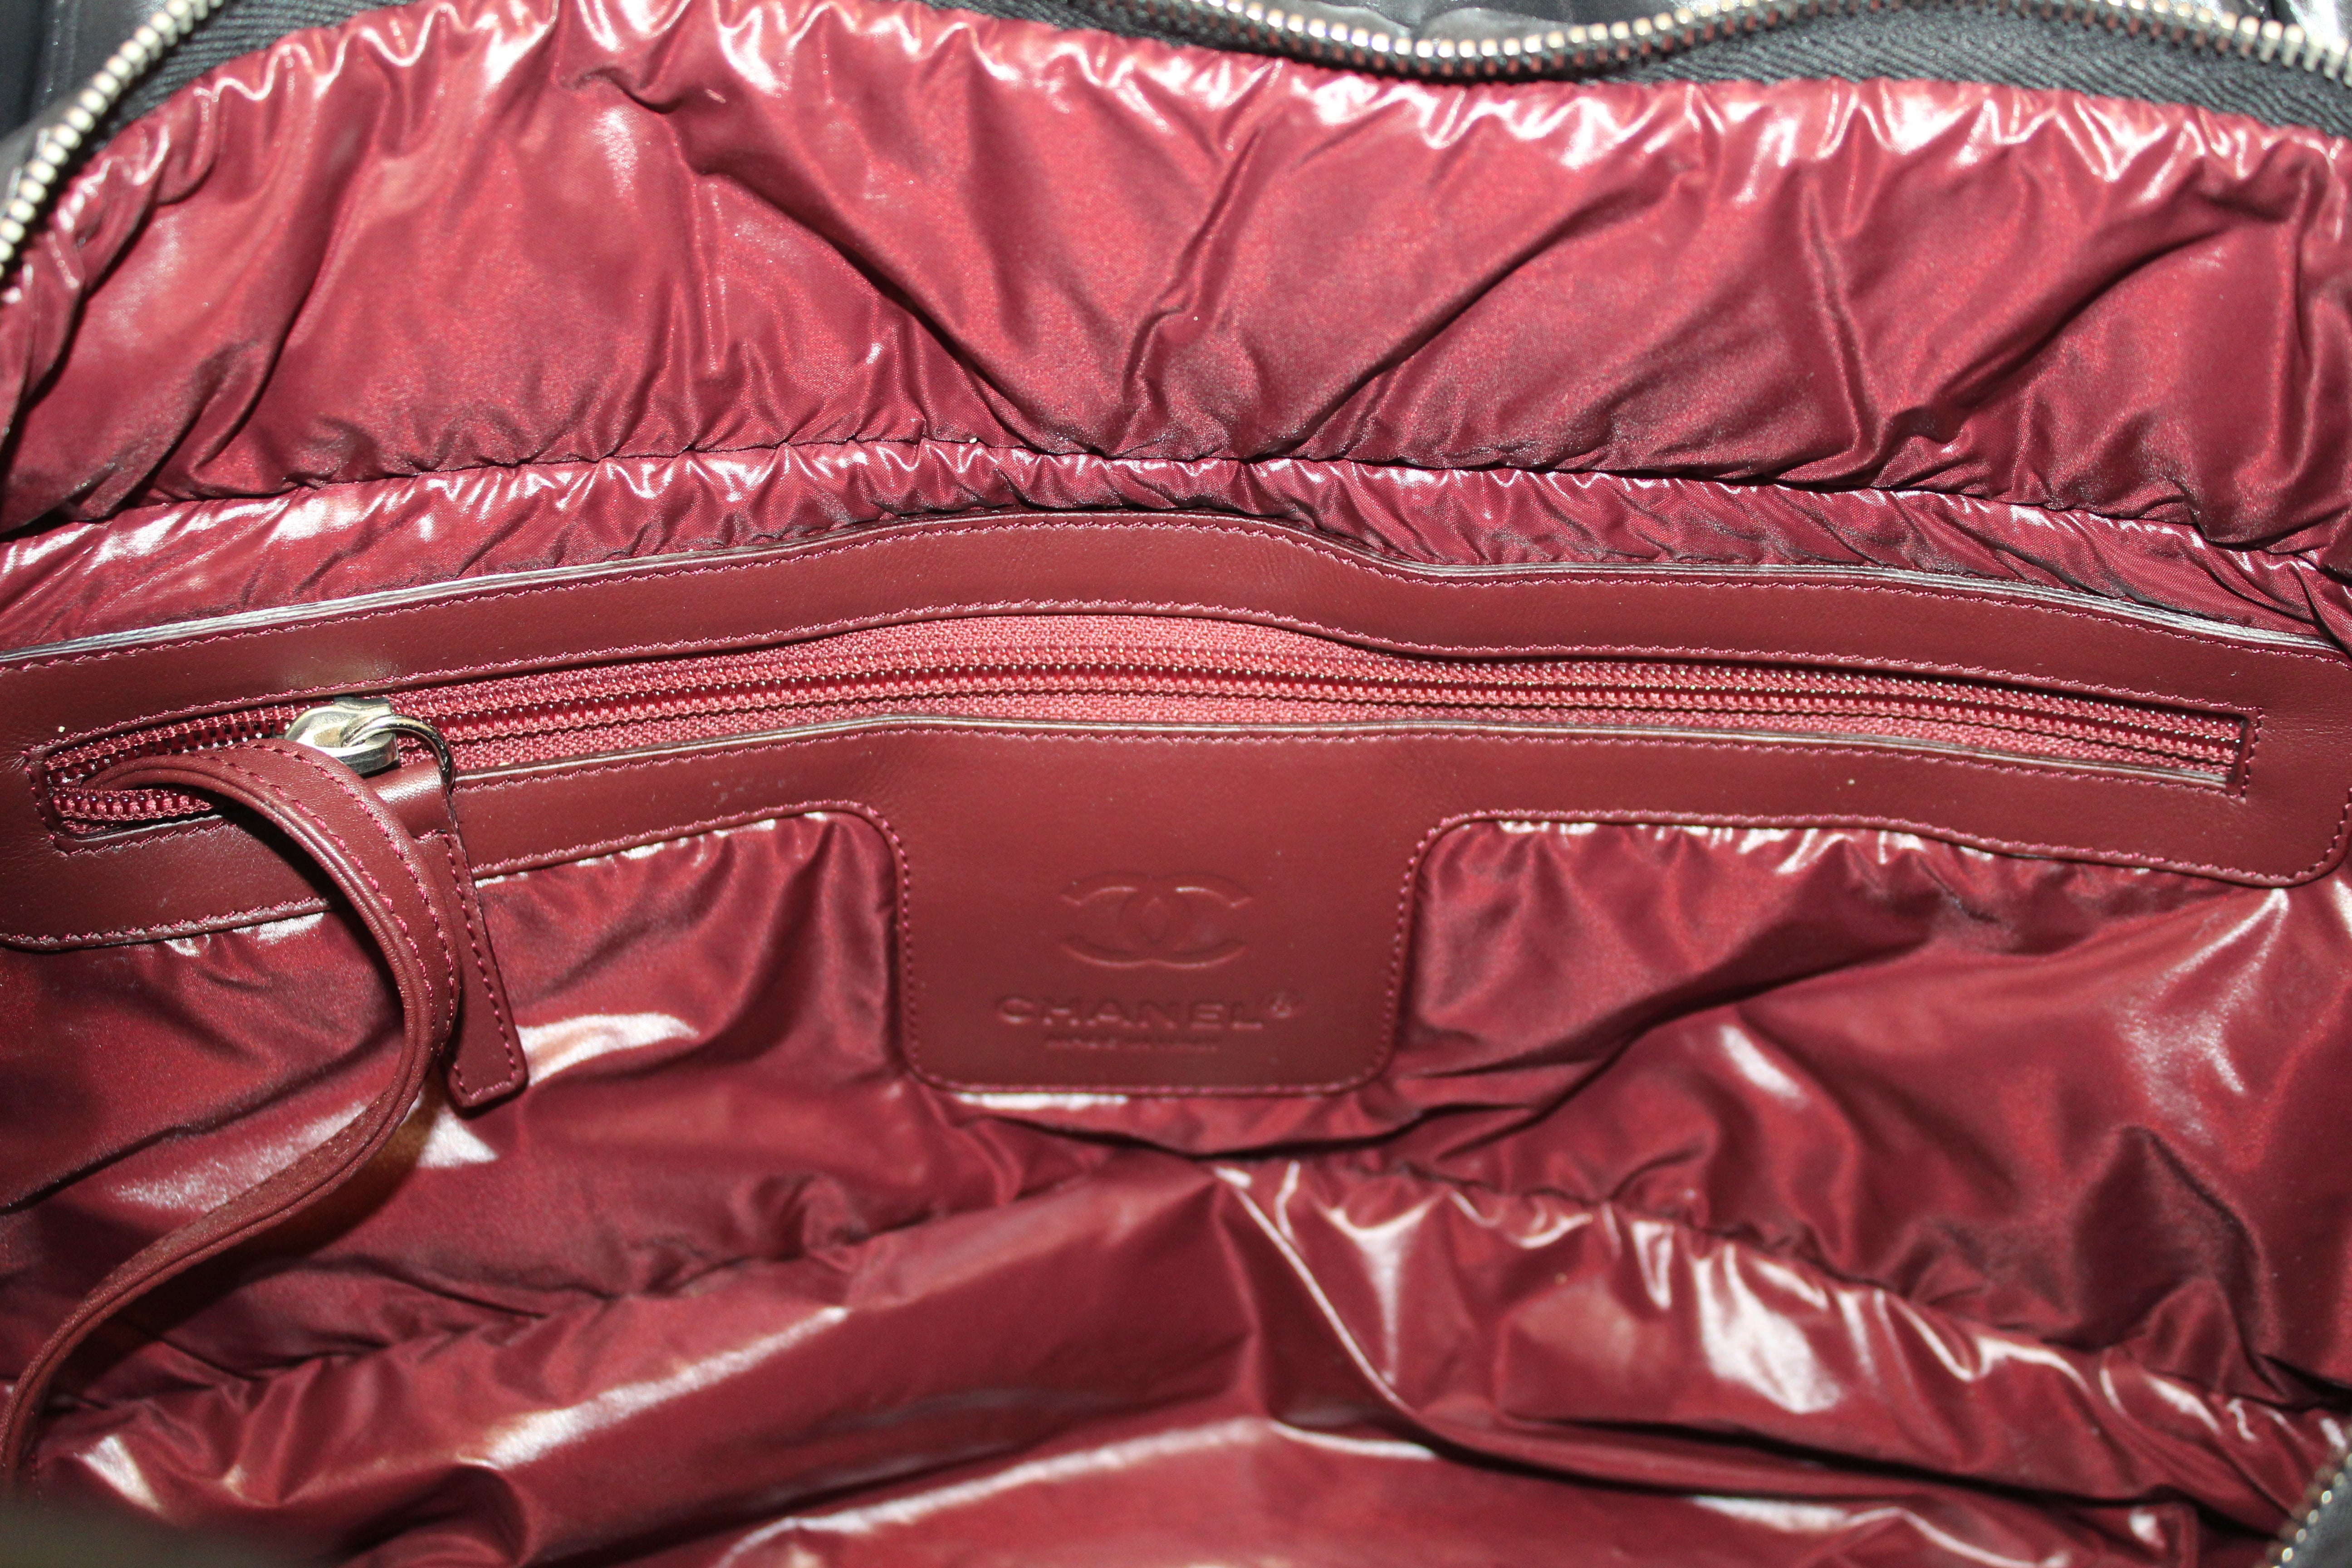 nylon chanel backpack bag